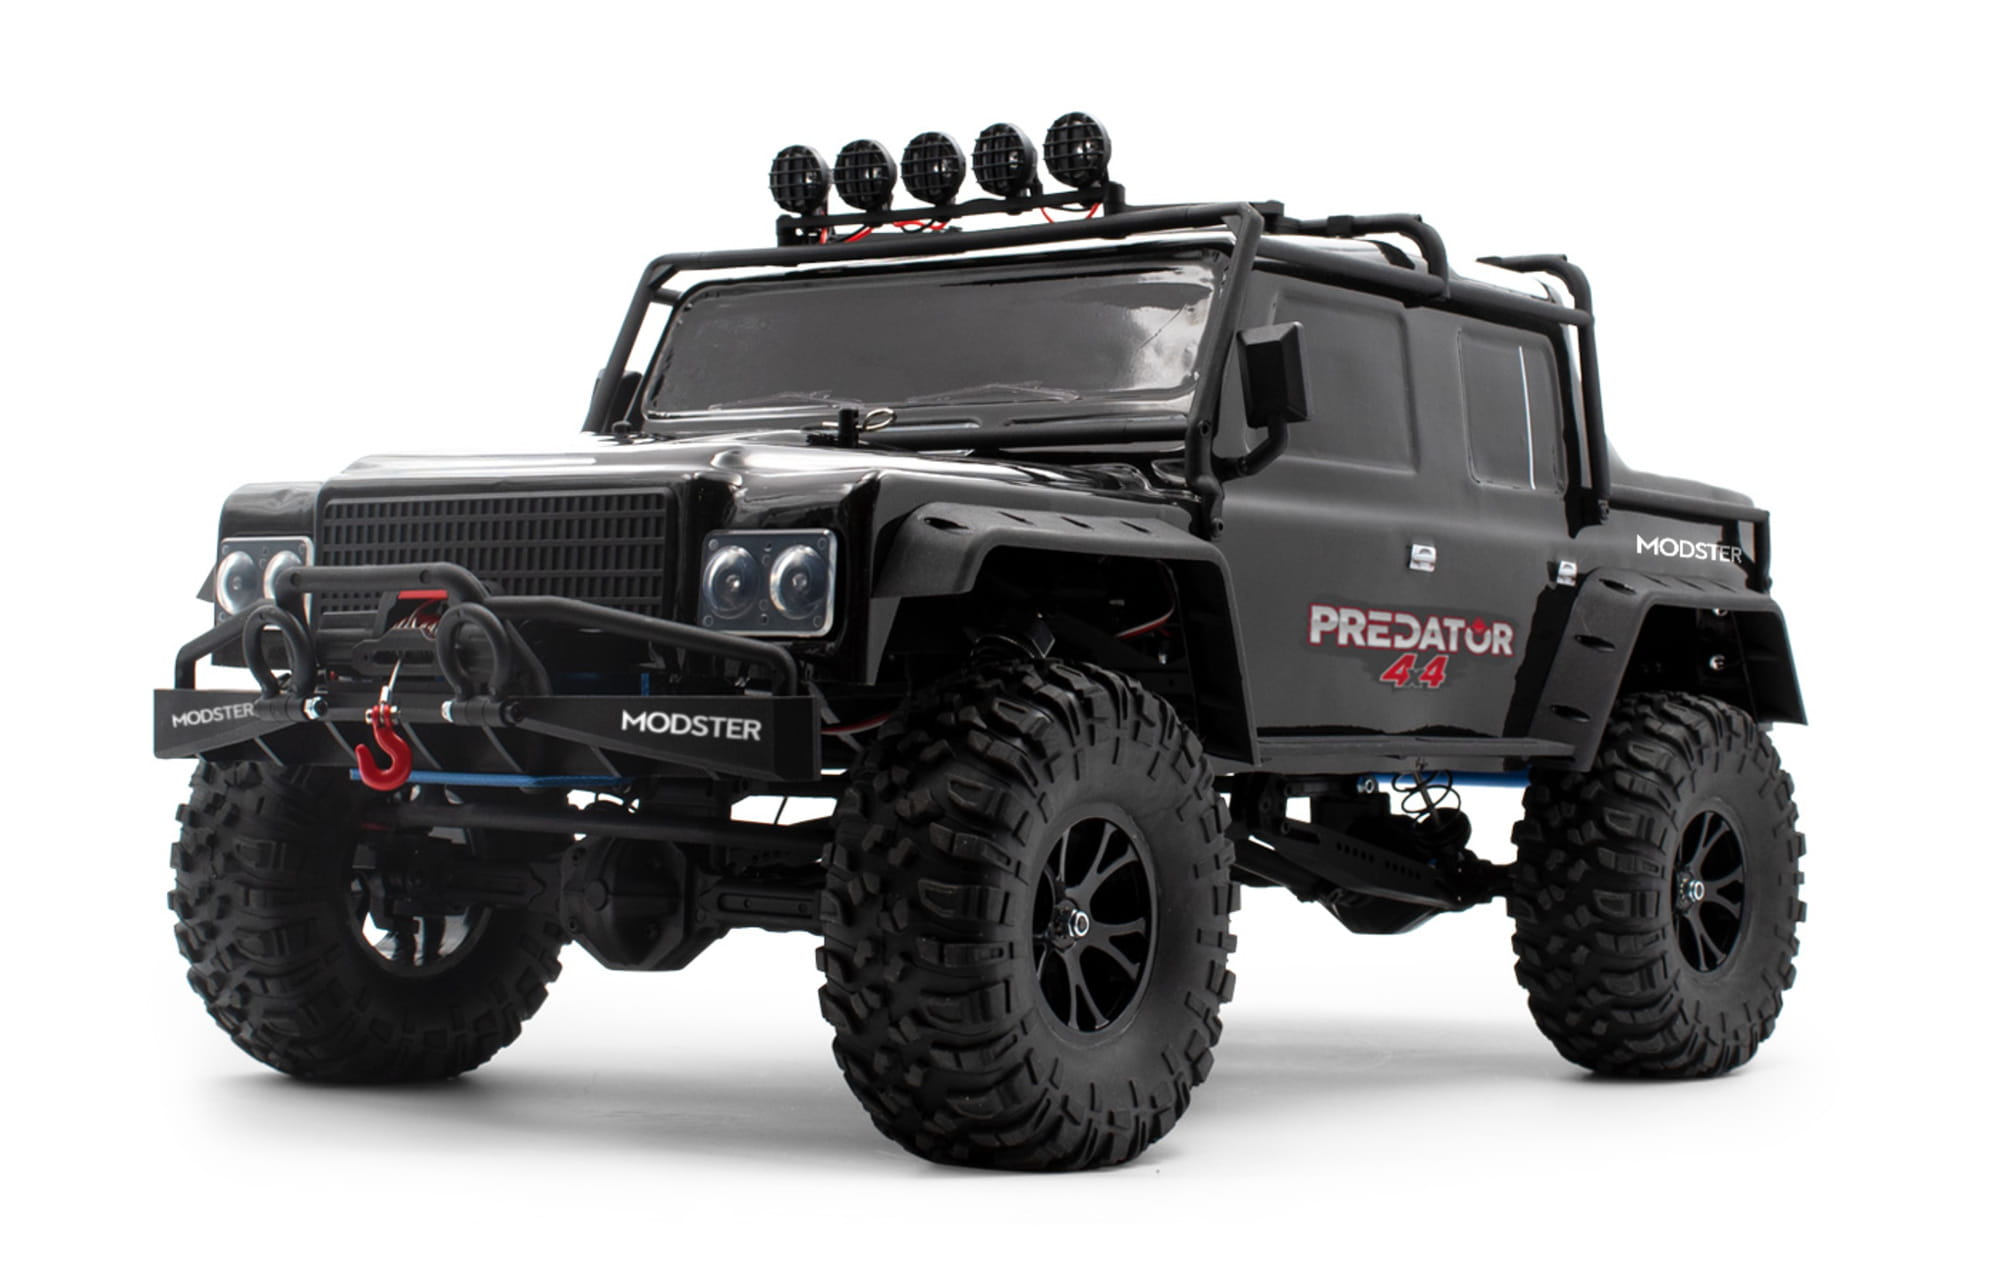 modster crawler offroad jeep predator rtr komplett set